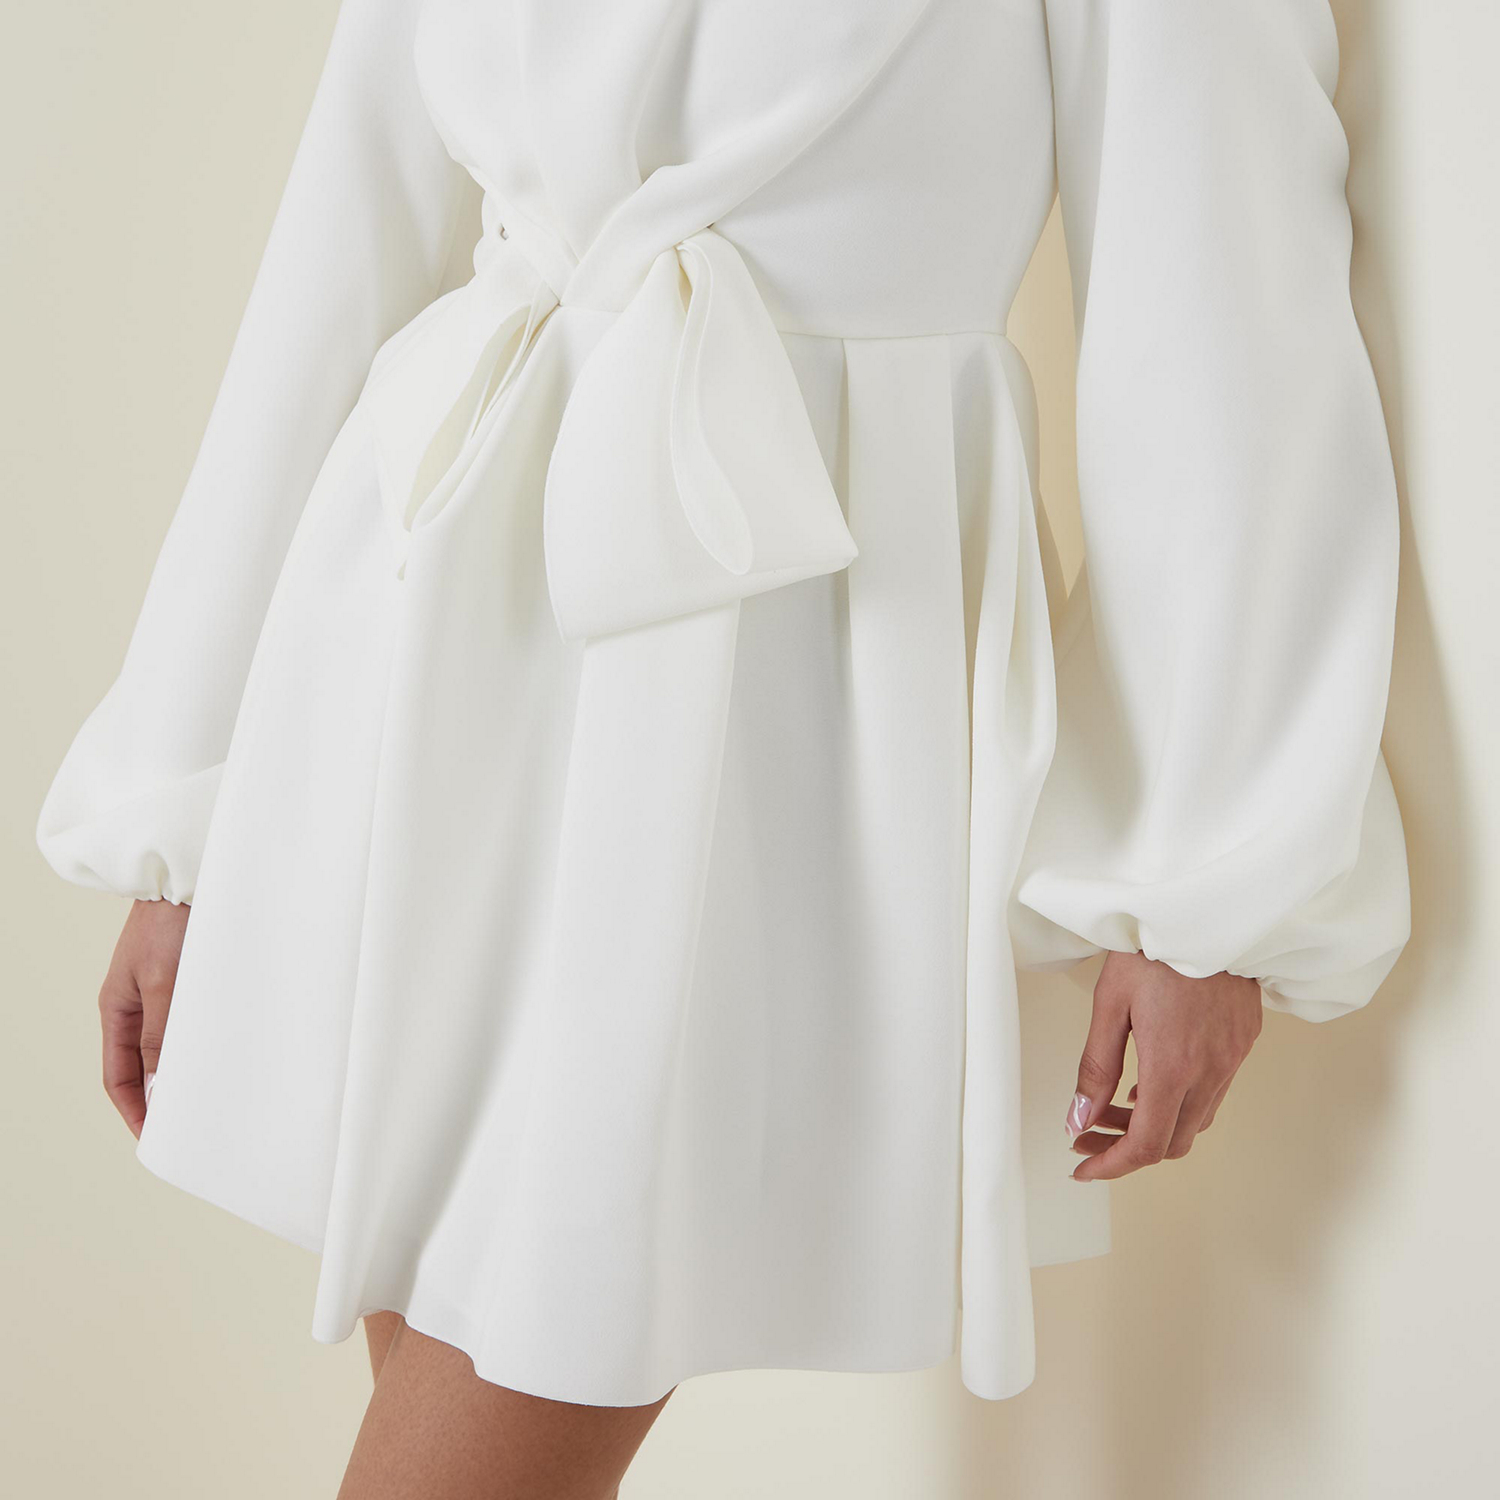 Yianna Long Sleeve Mini Dress